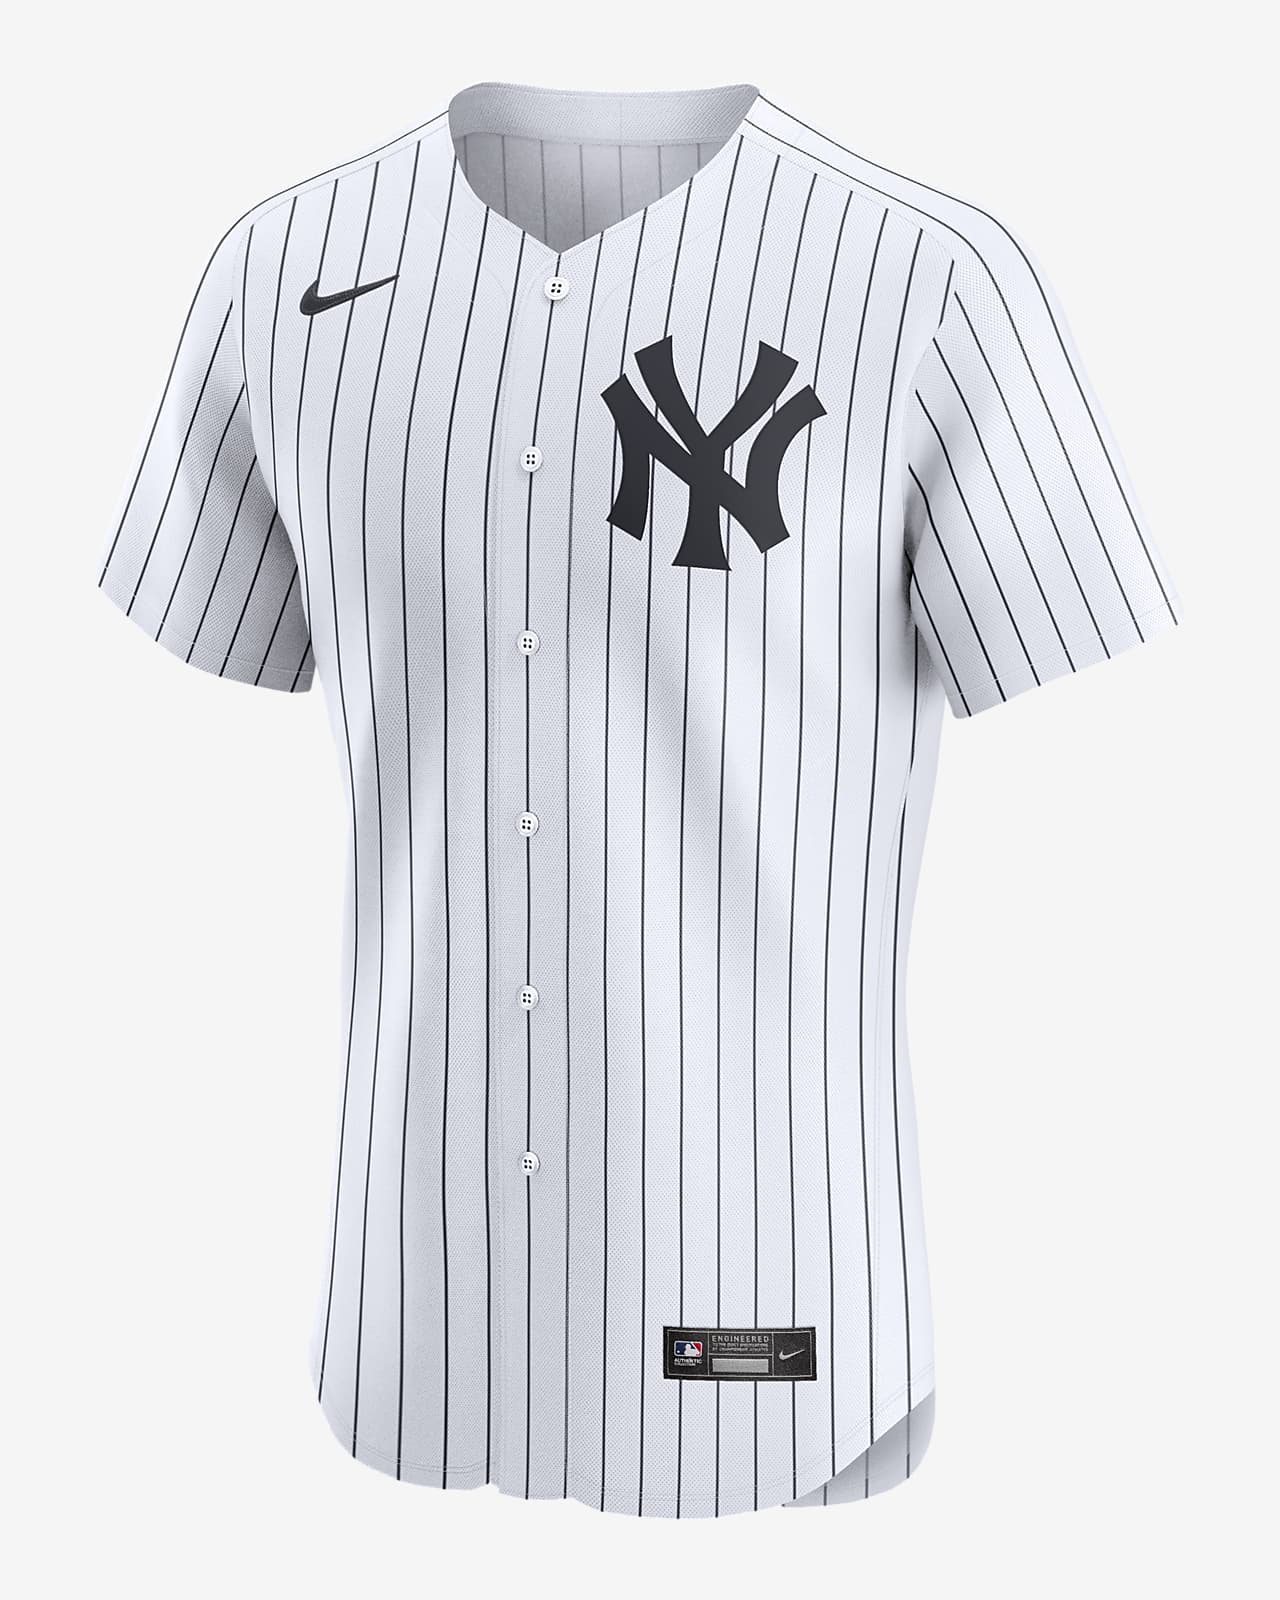 Anthony Volpe New York Yankees Men's Nike Dri-FIT ADV MLB Elite Jersey